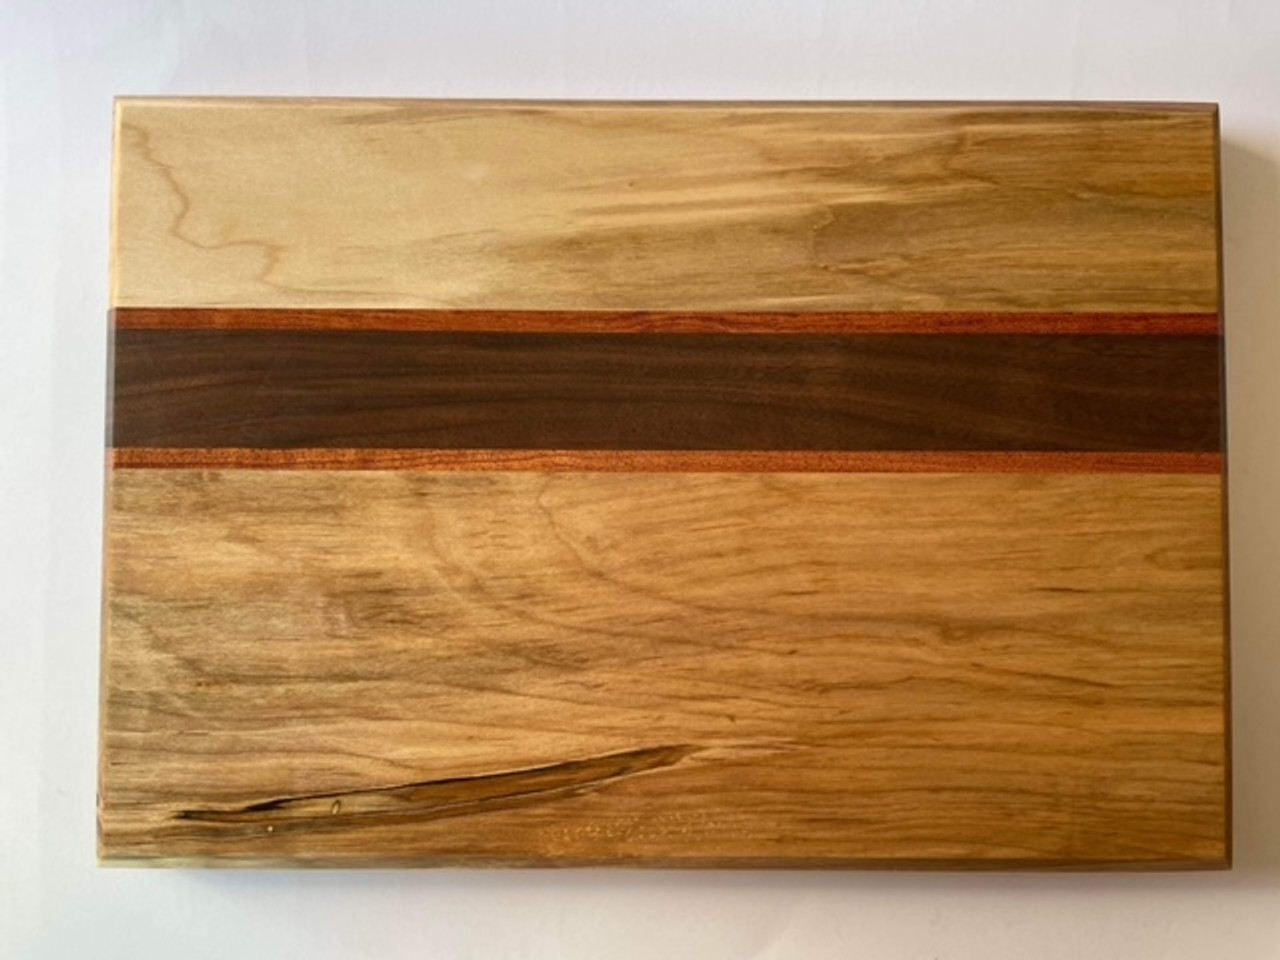 Handmade Wood Cutting Board: Black Walnut, Sugar Maple, and Jatoba